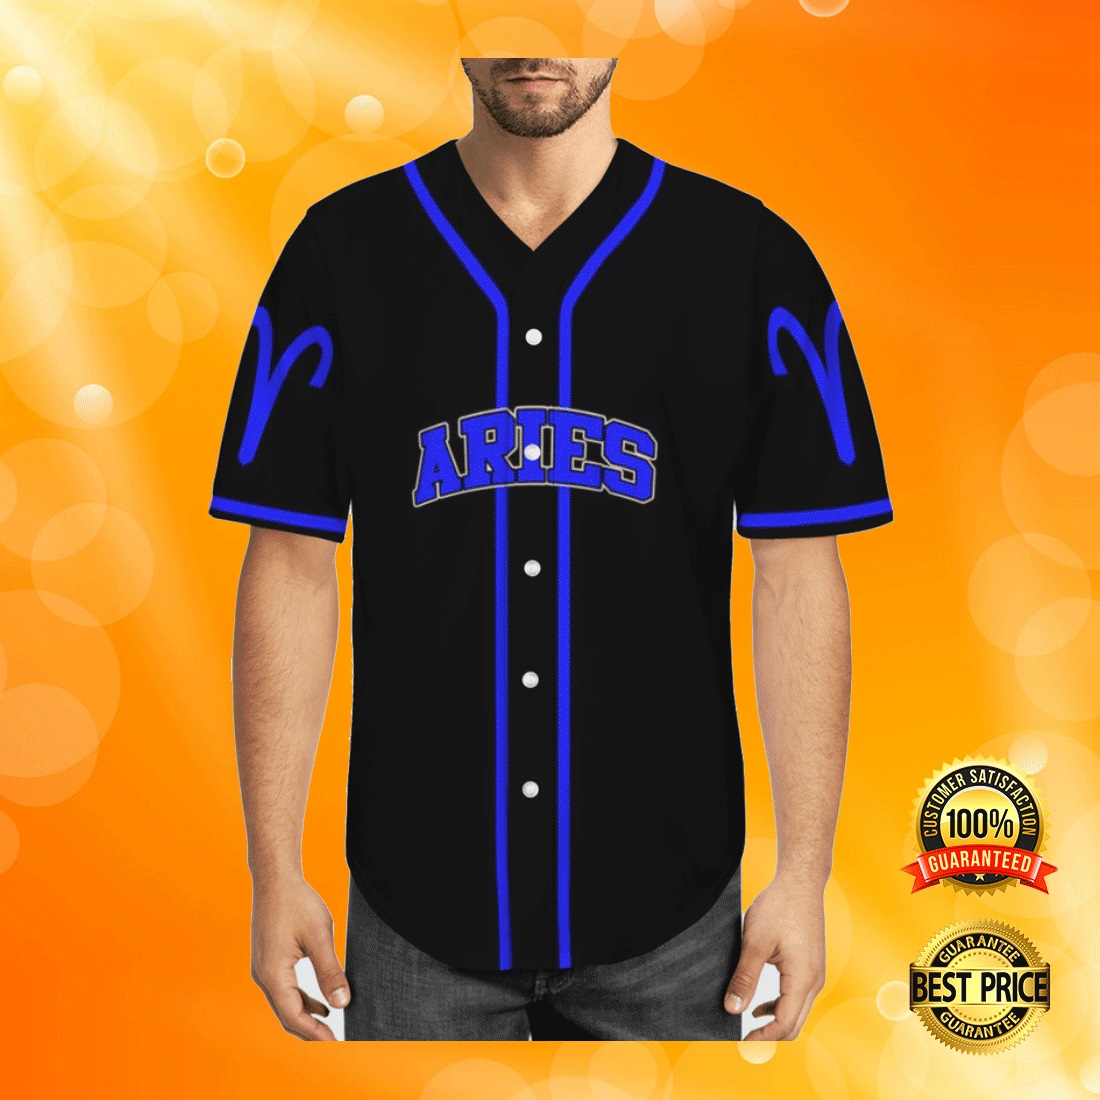 Aries baseball jersey 1